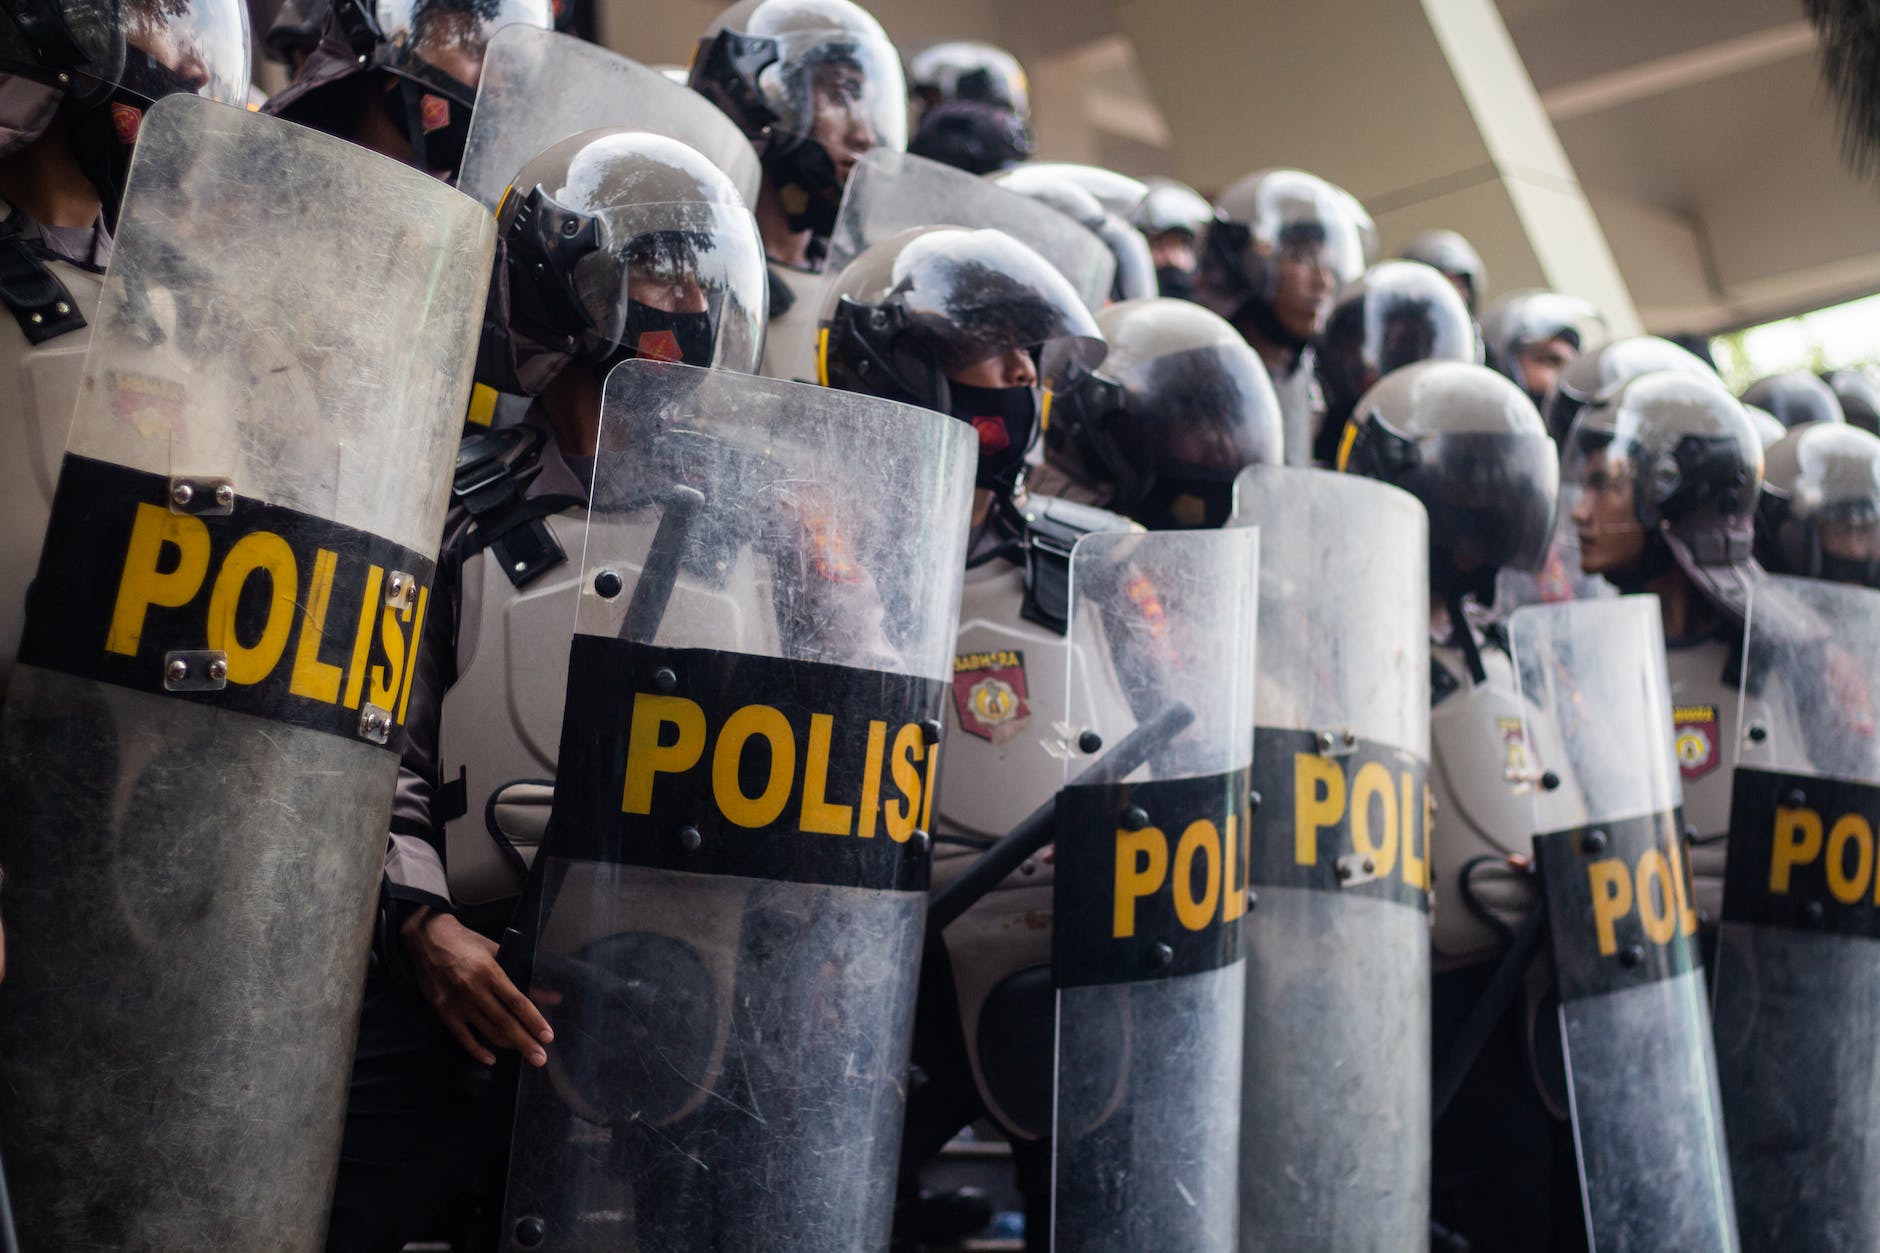 policemen wearing black helmets standing on the street holding police shields